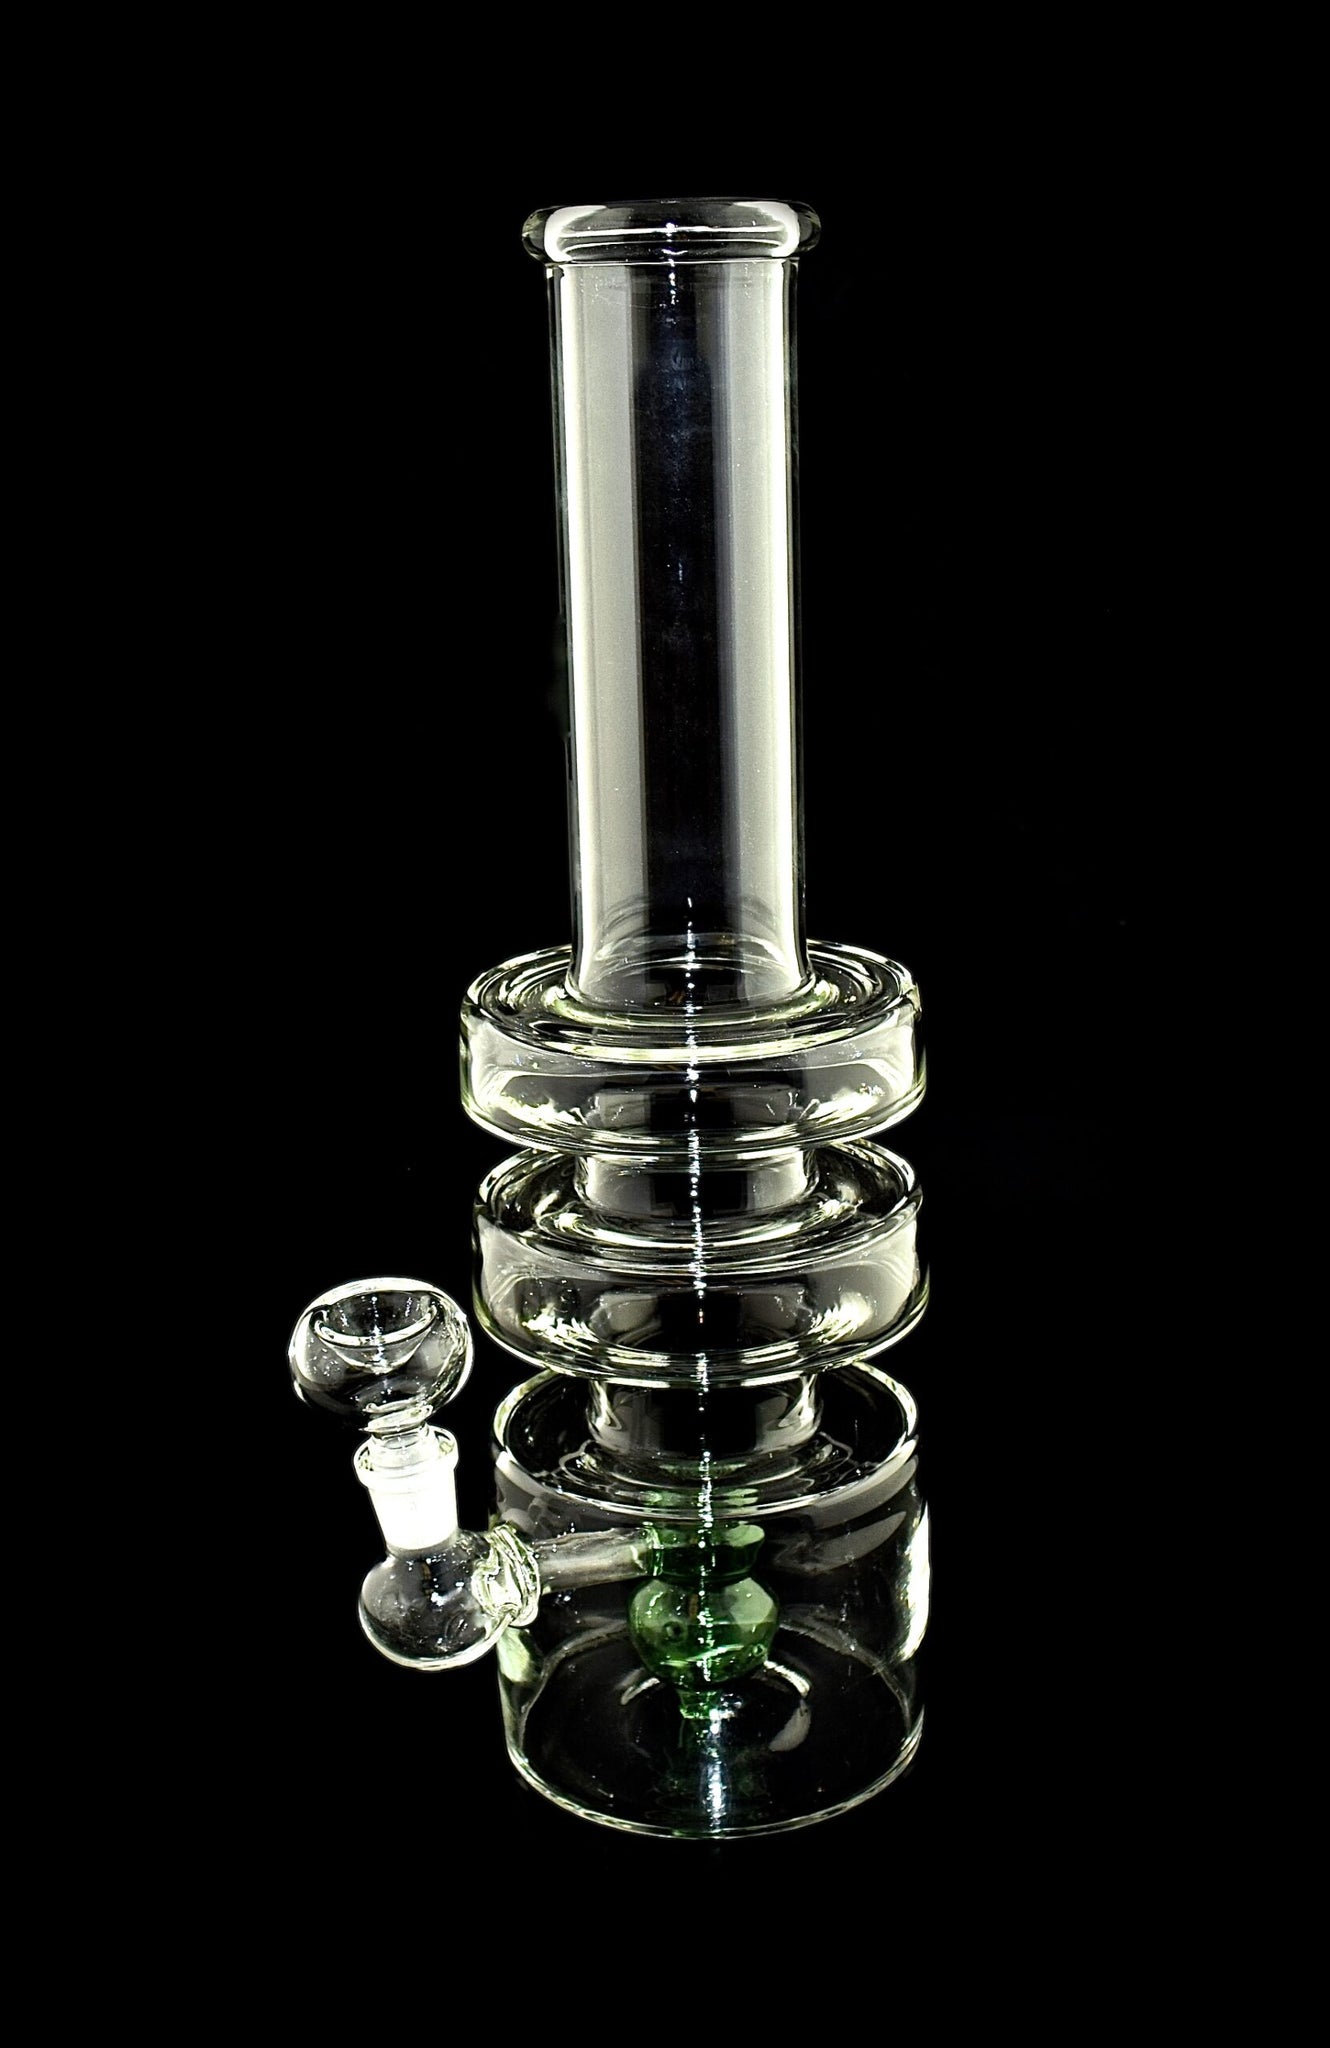 Glass bong Smoking  Pellucid Green with an Ongoing Flat Circular Designed -629